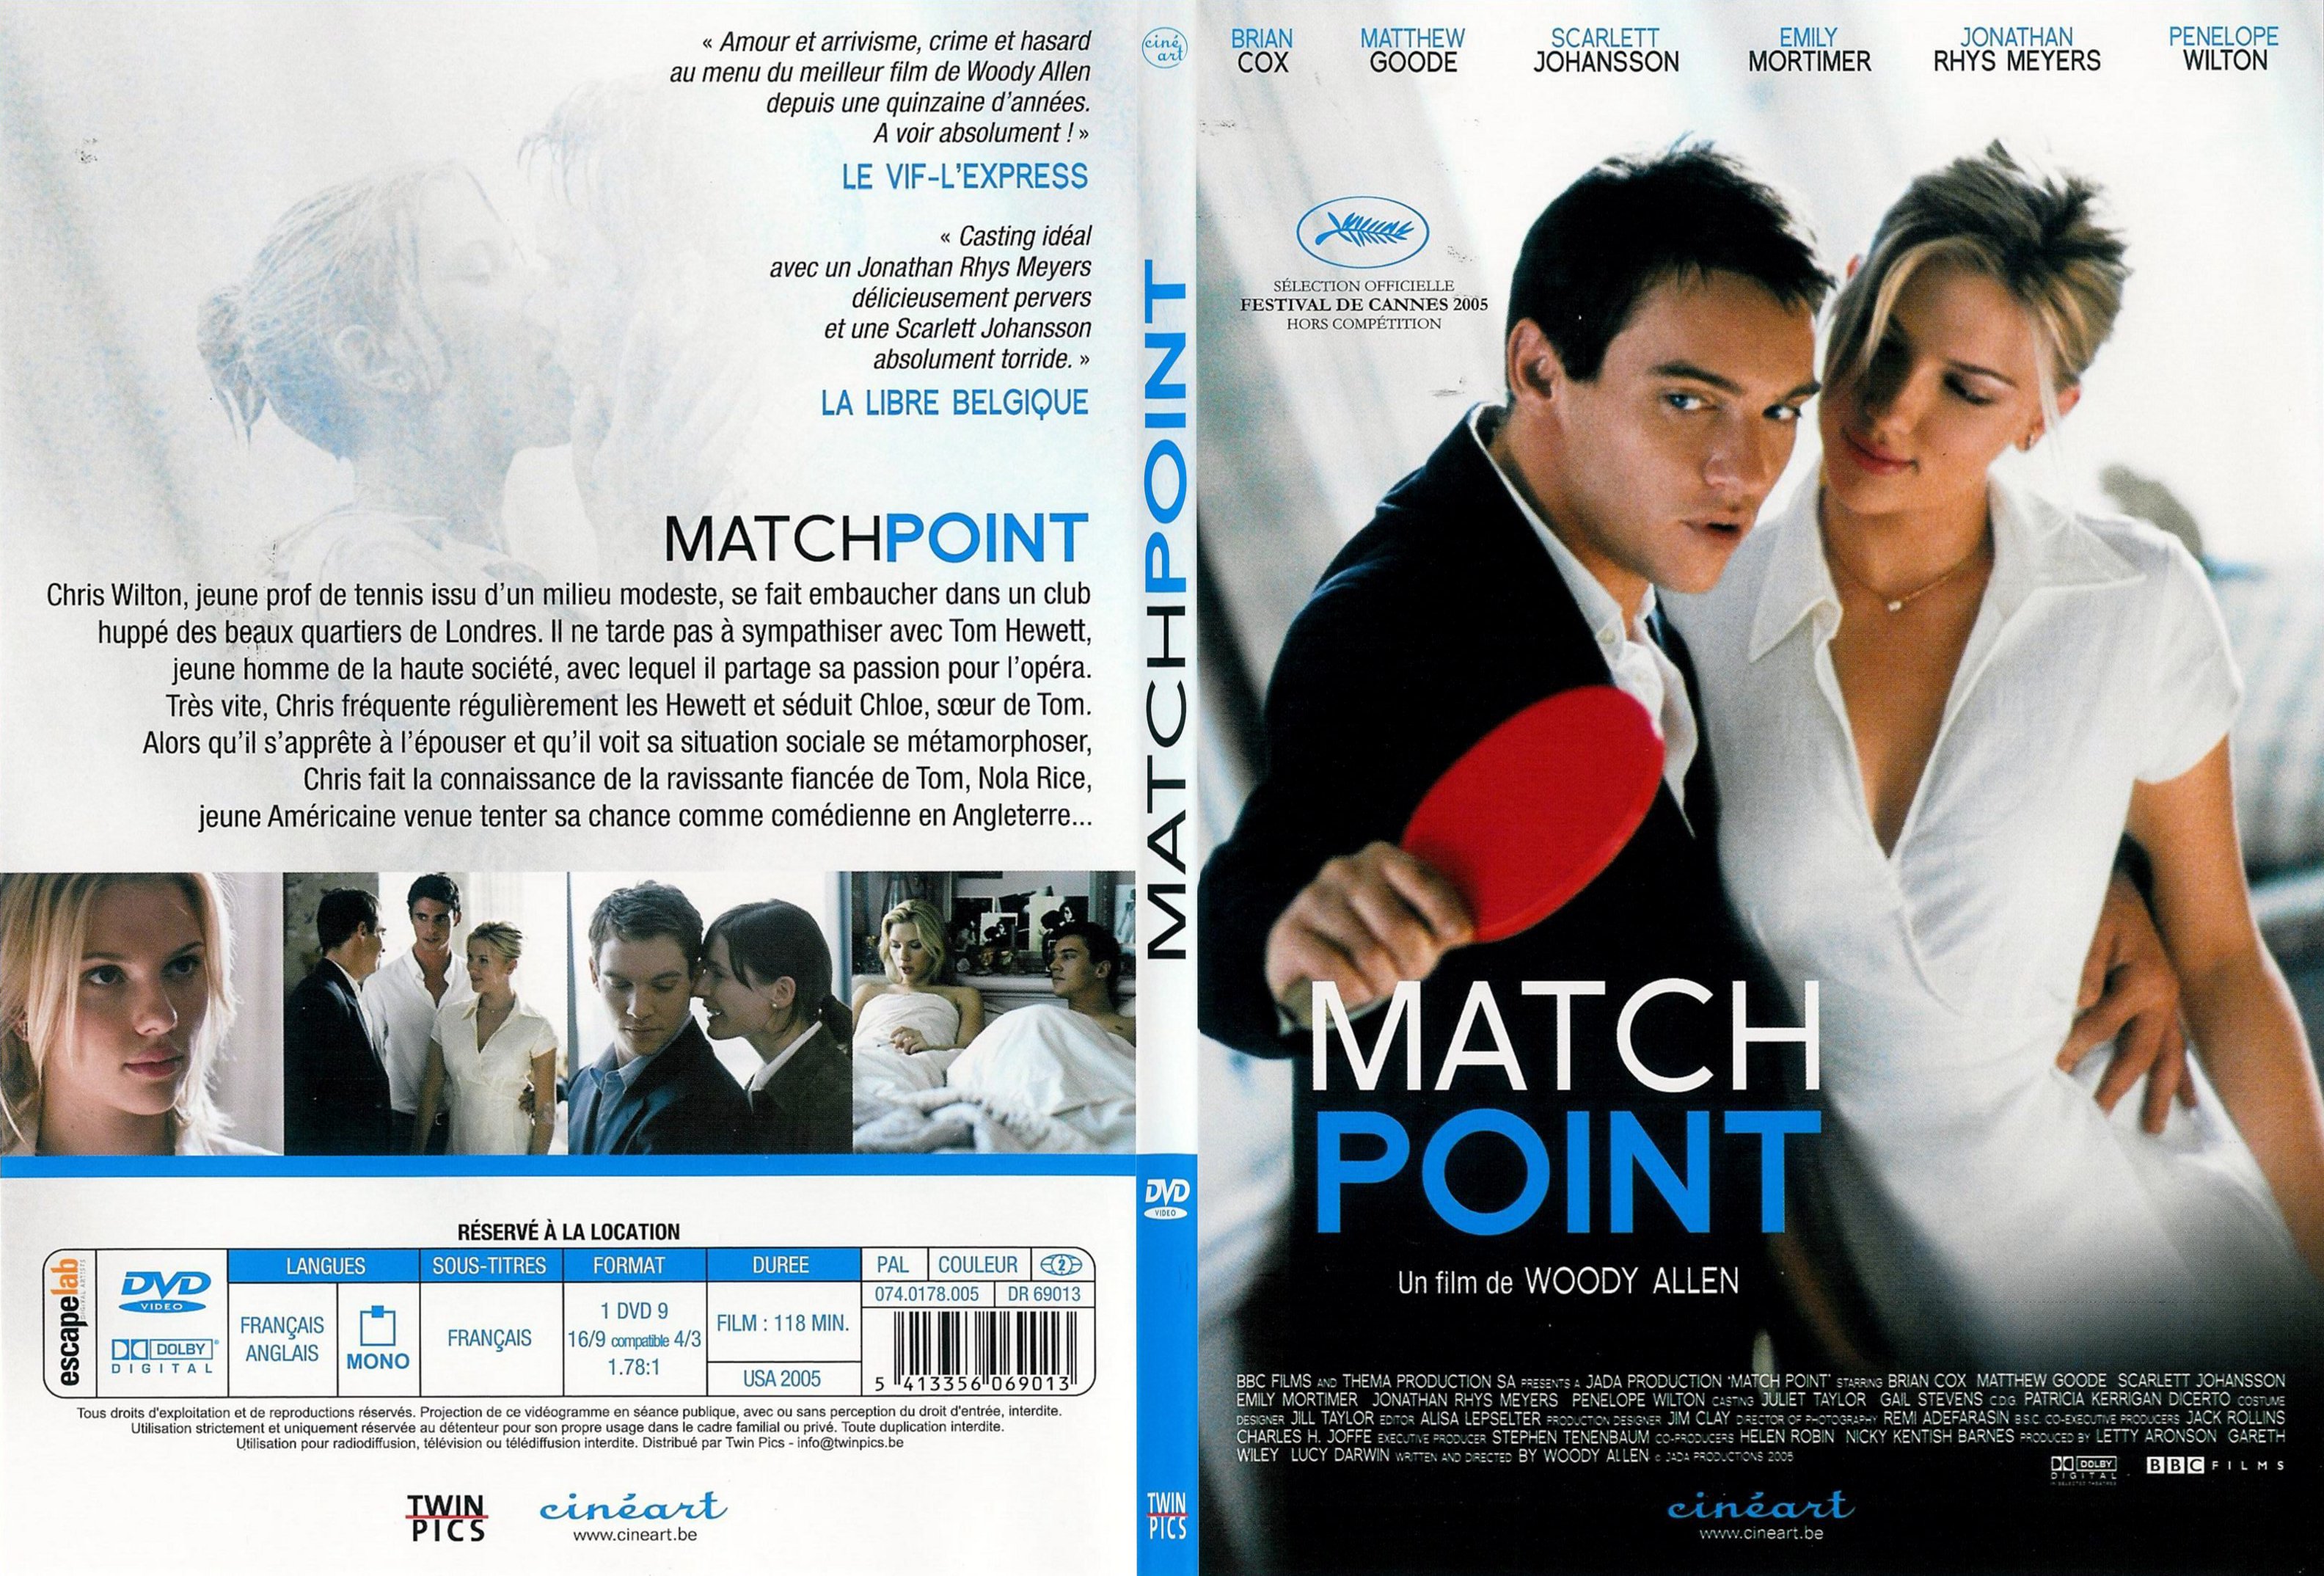 Jaquette DVD Match point - SLIM v2